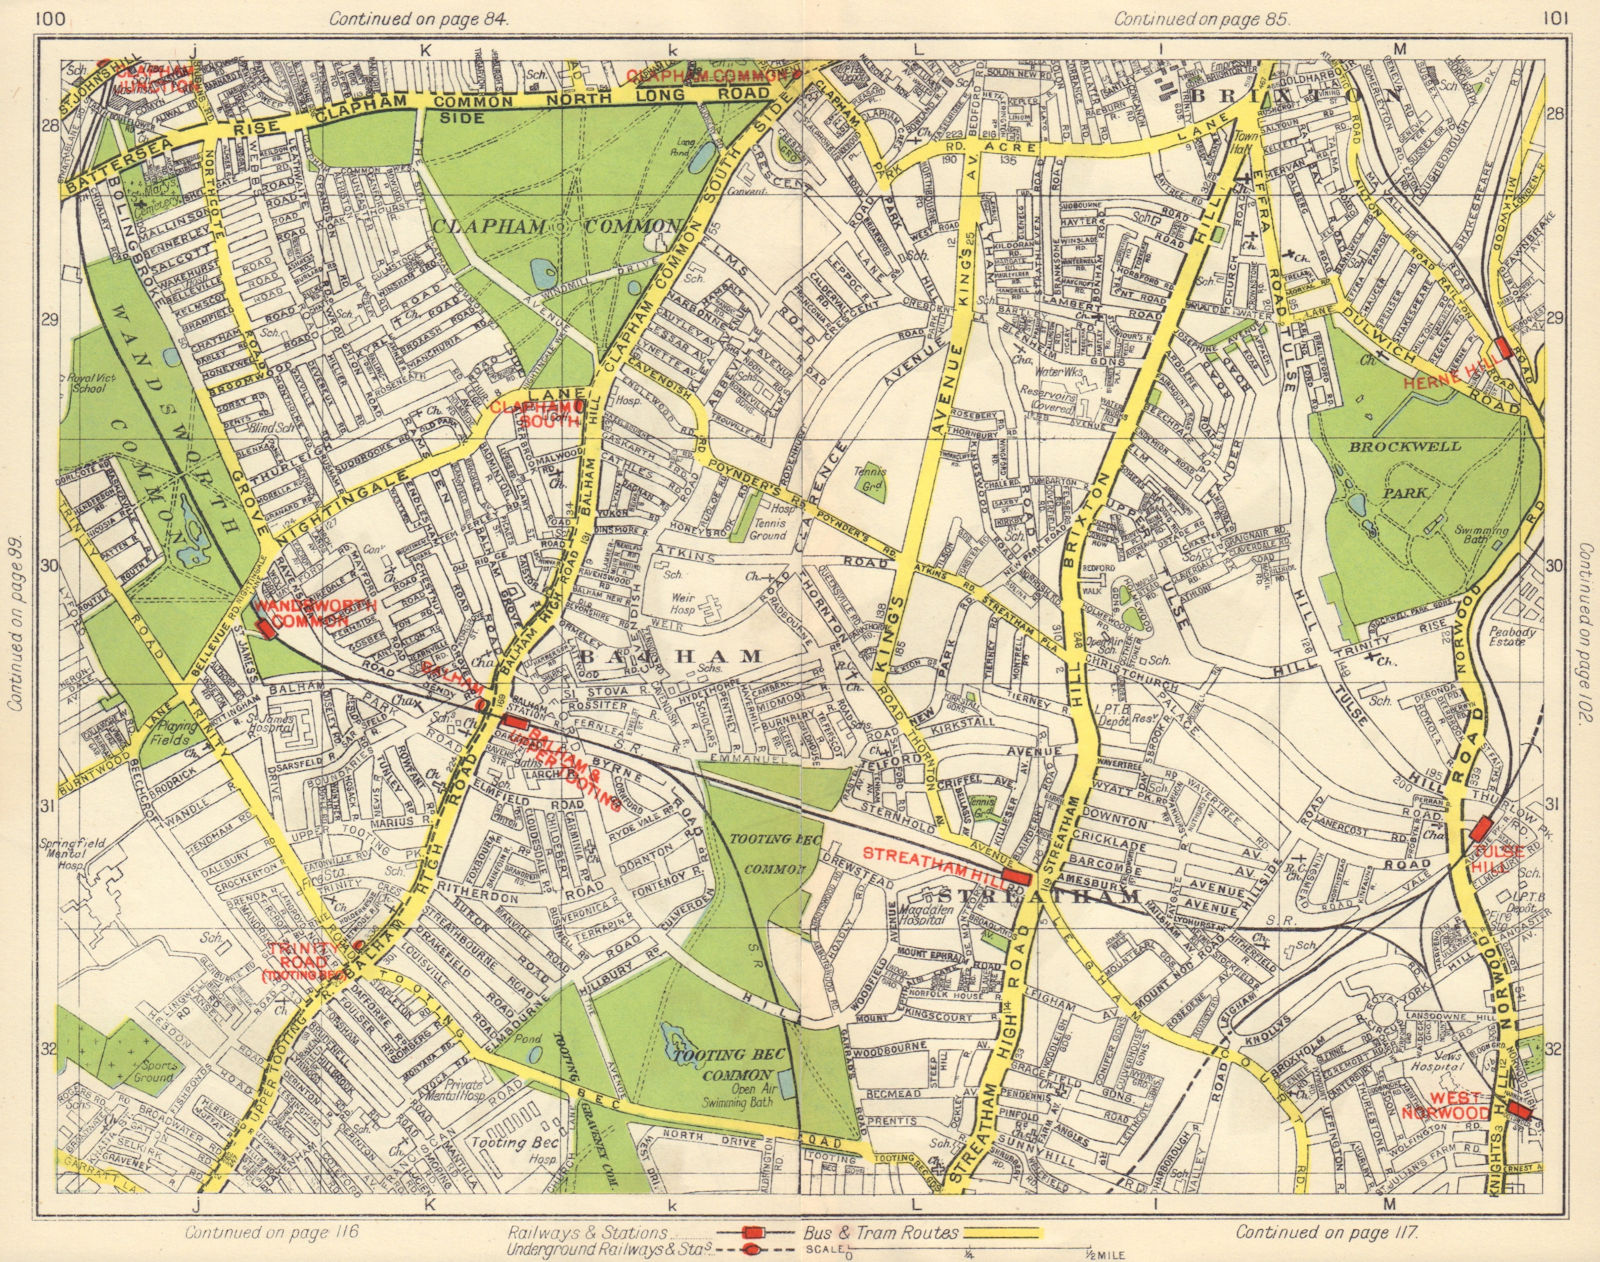 S LONDON. Tooting Bec Streatham Balham Brixton Clapham Wandsworth Cmn 1948 map